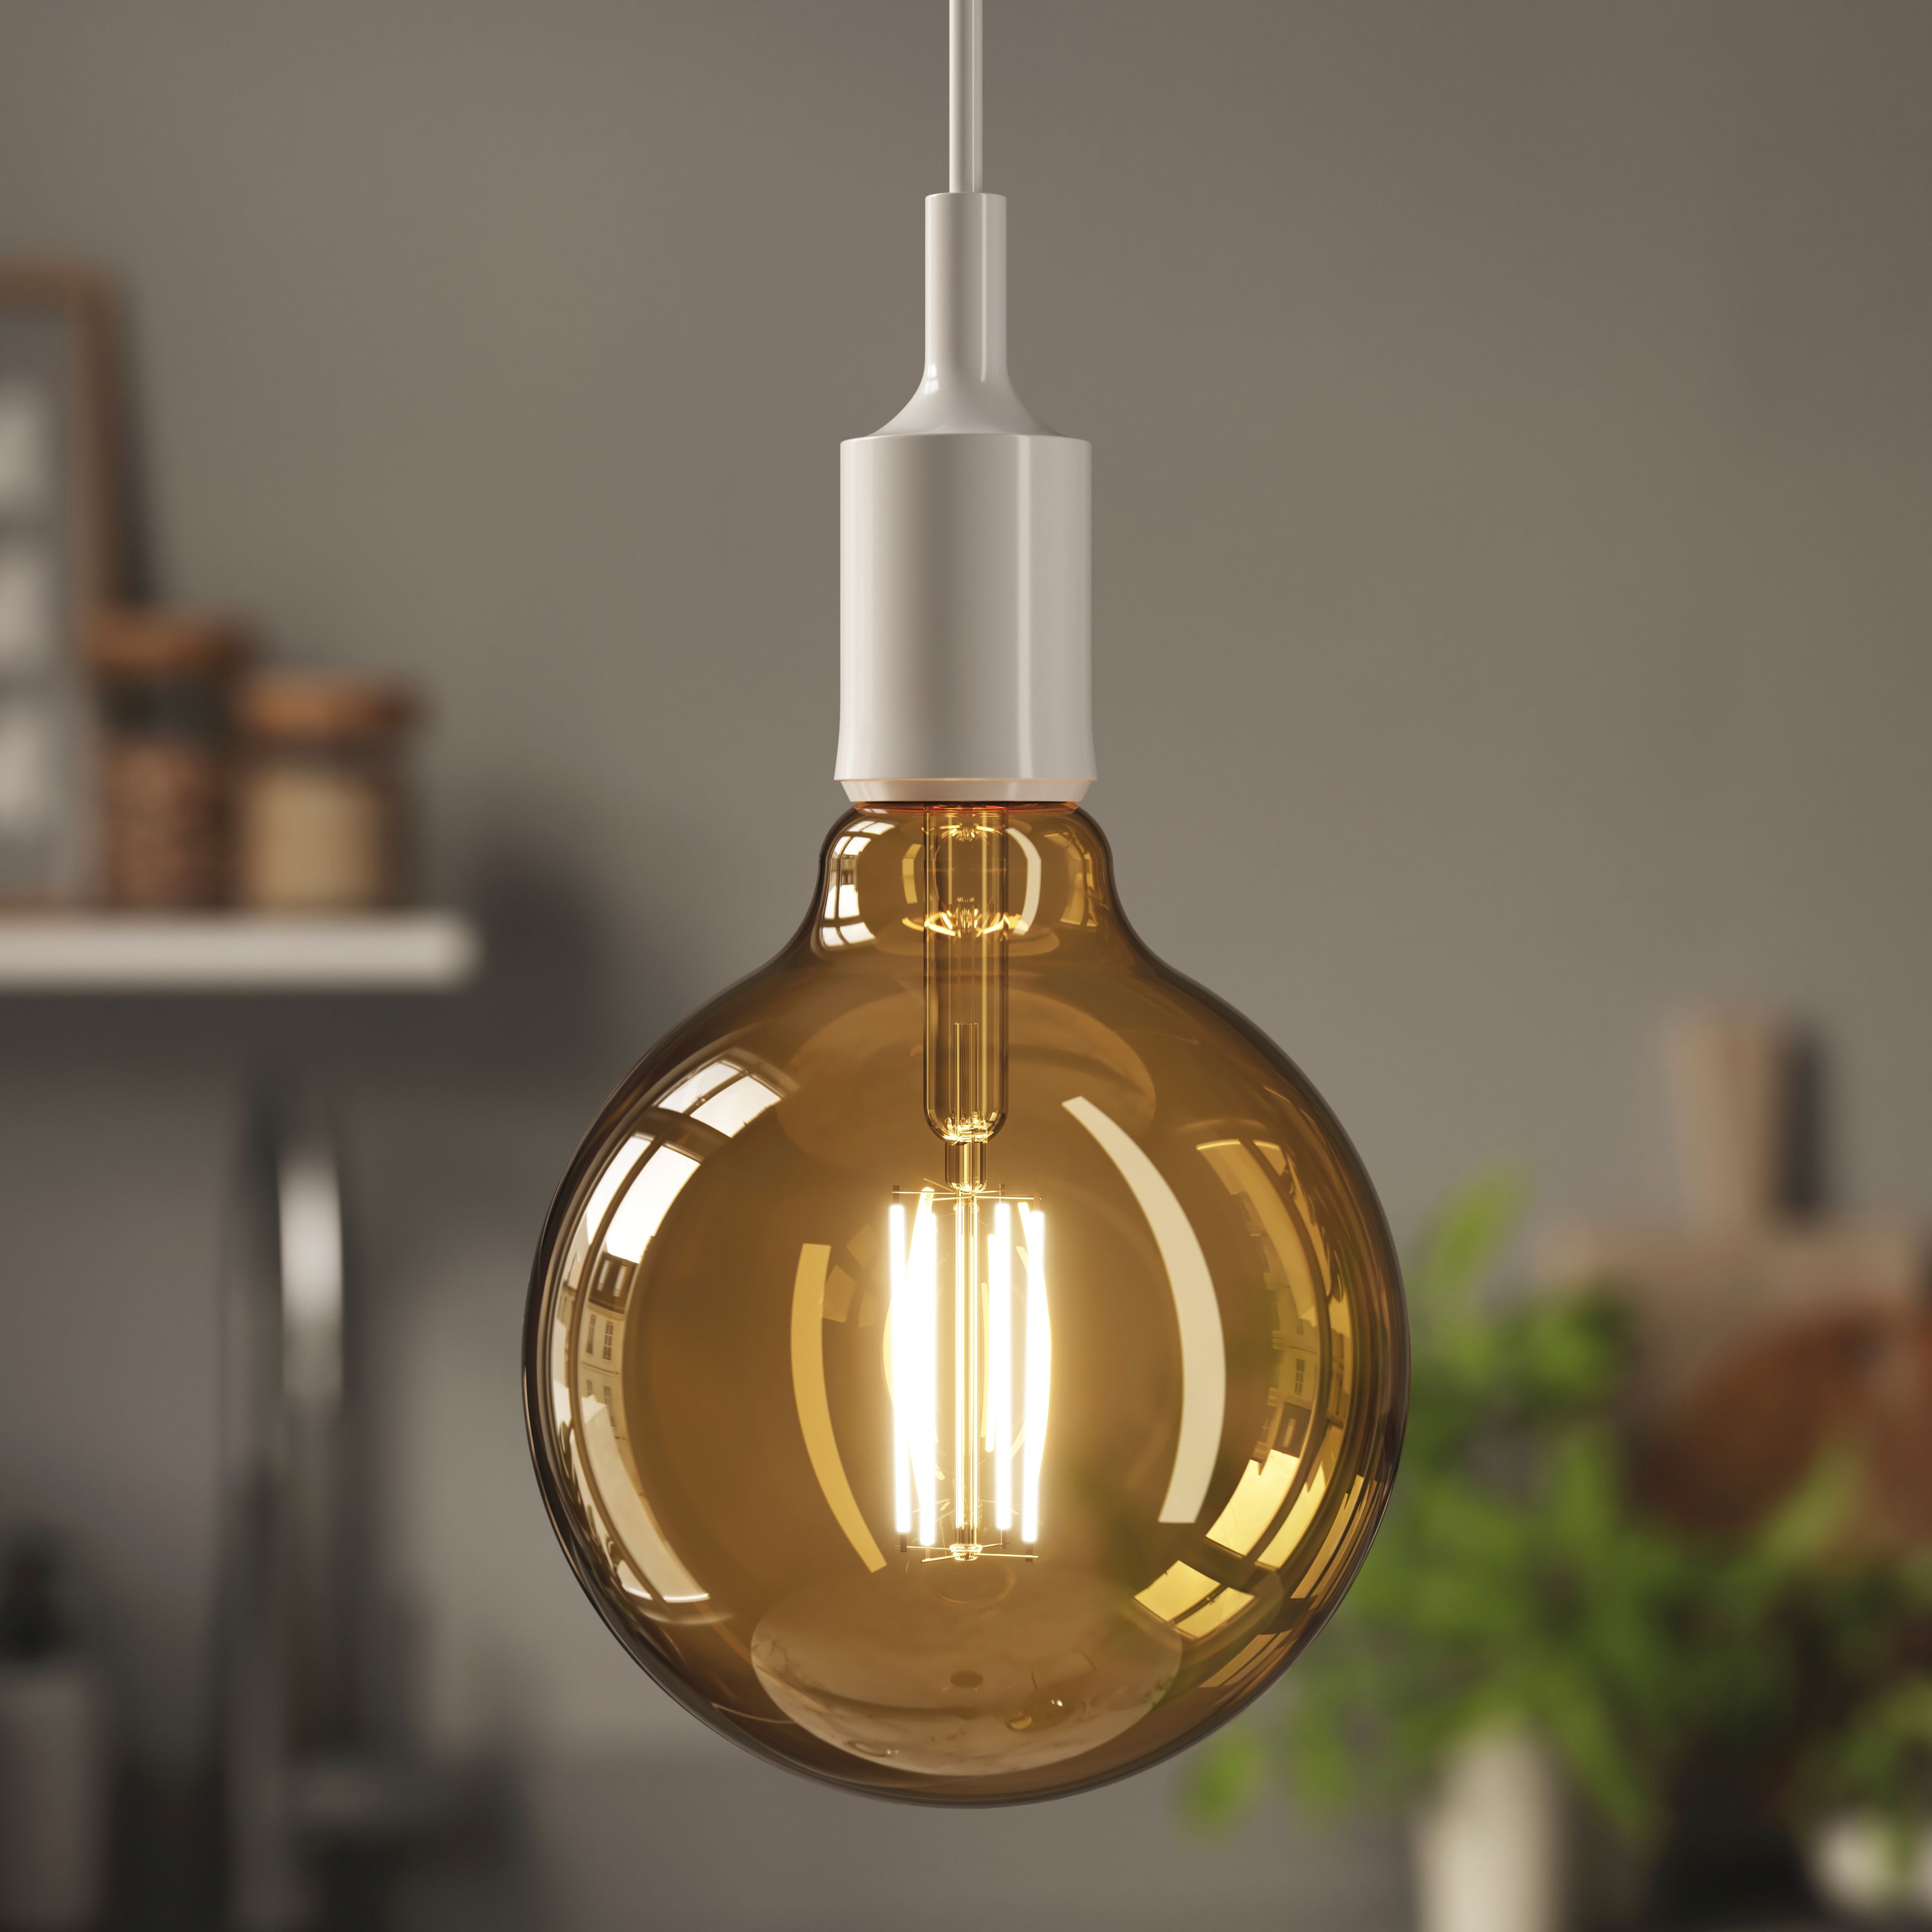 Diall G125 B22 8.5W 806lm Amber Globe Warm white LED Filament Light bulb